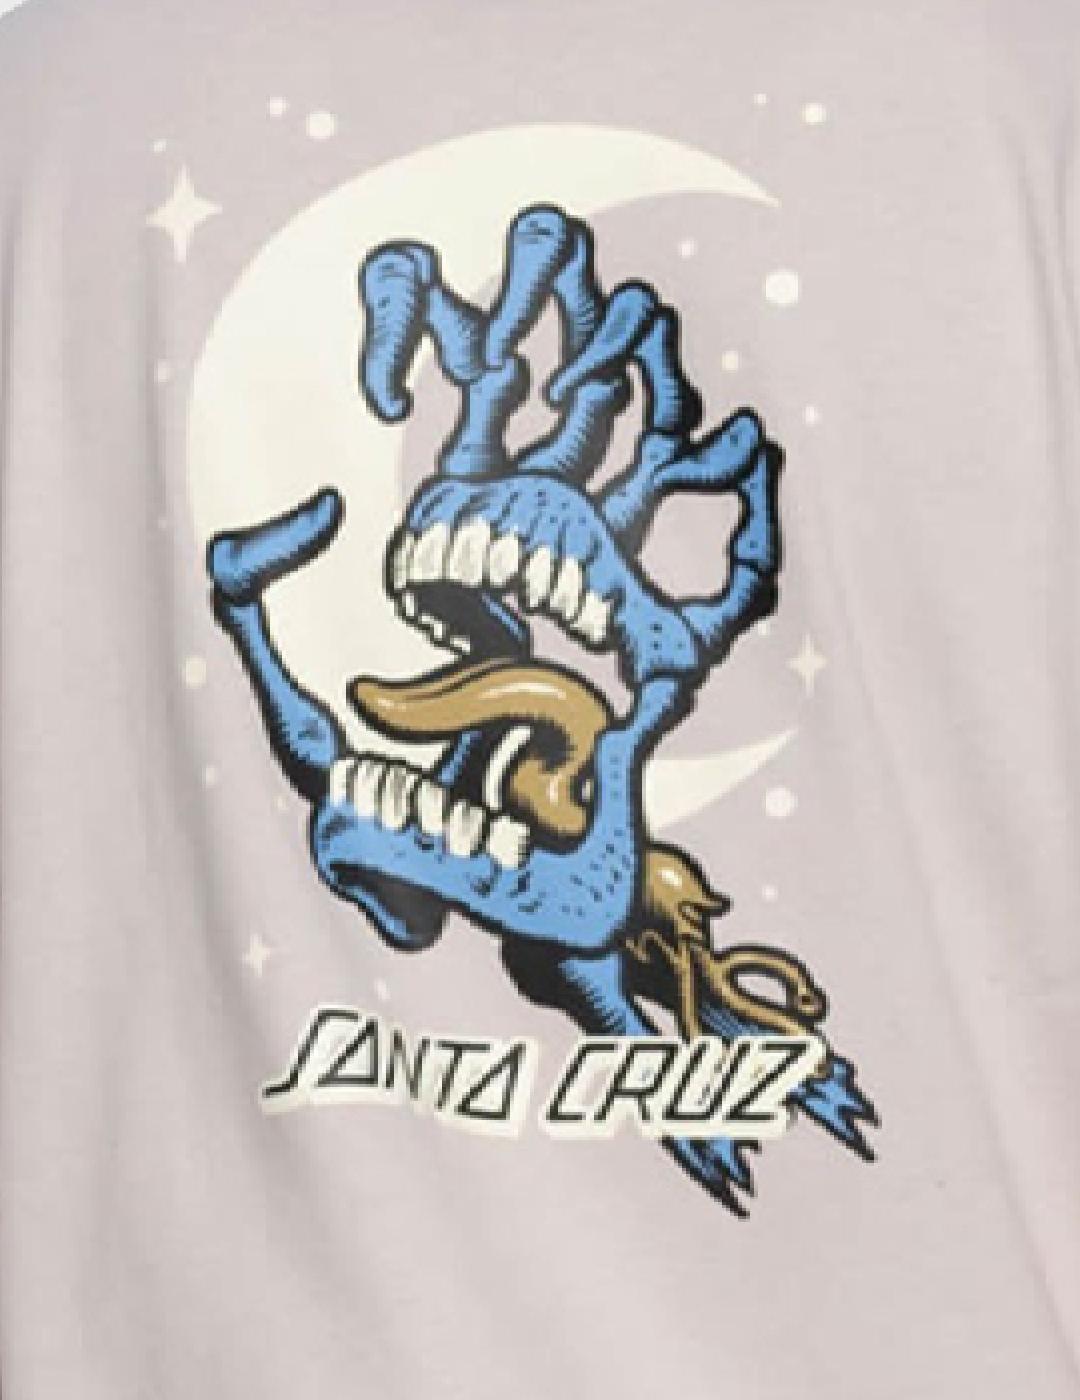 Camiseta Santa Cruz Cosmic Bone Hand